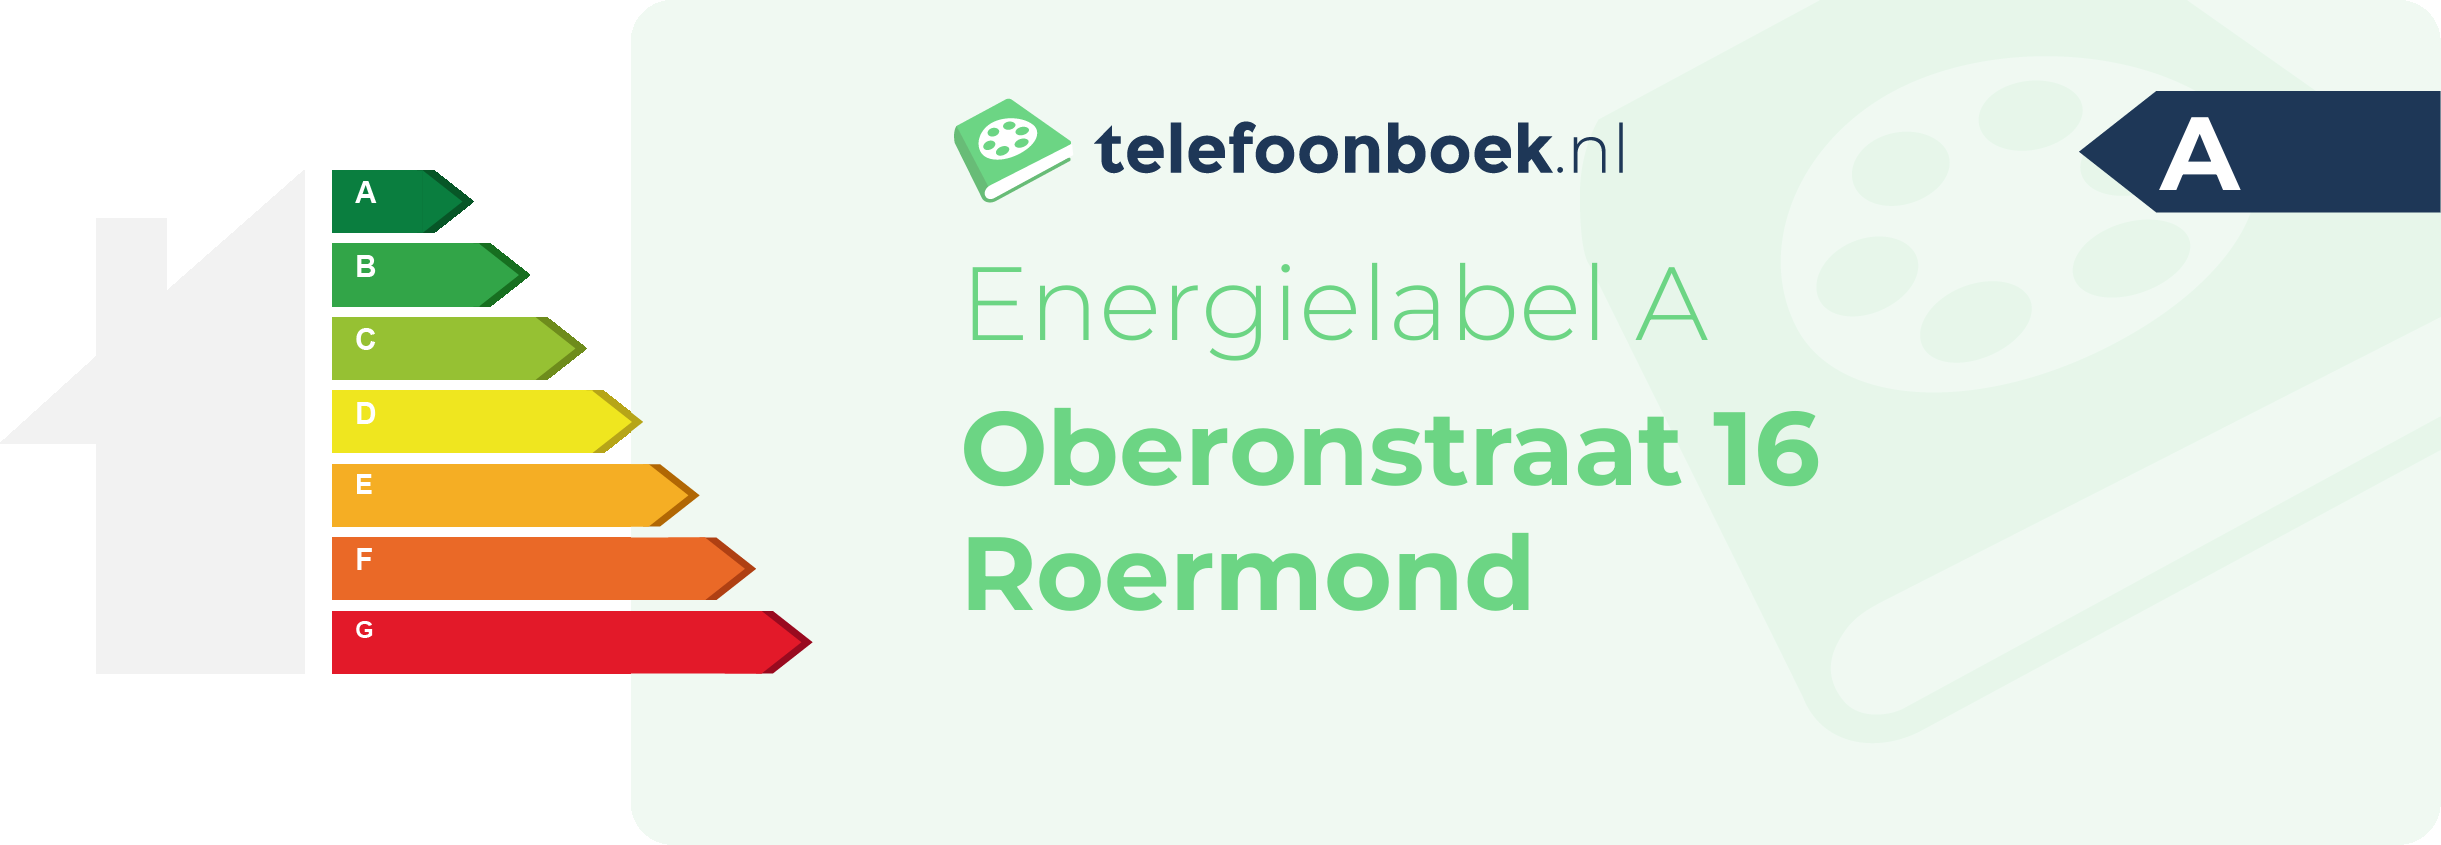 Energielabel Oberonstraat 16 Roermond